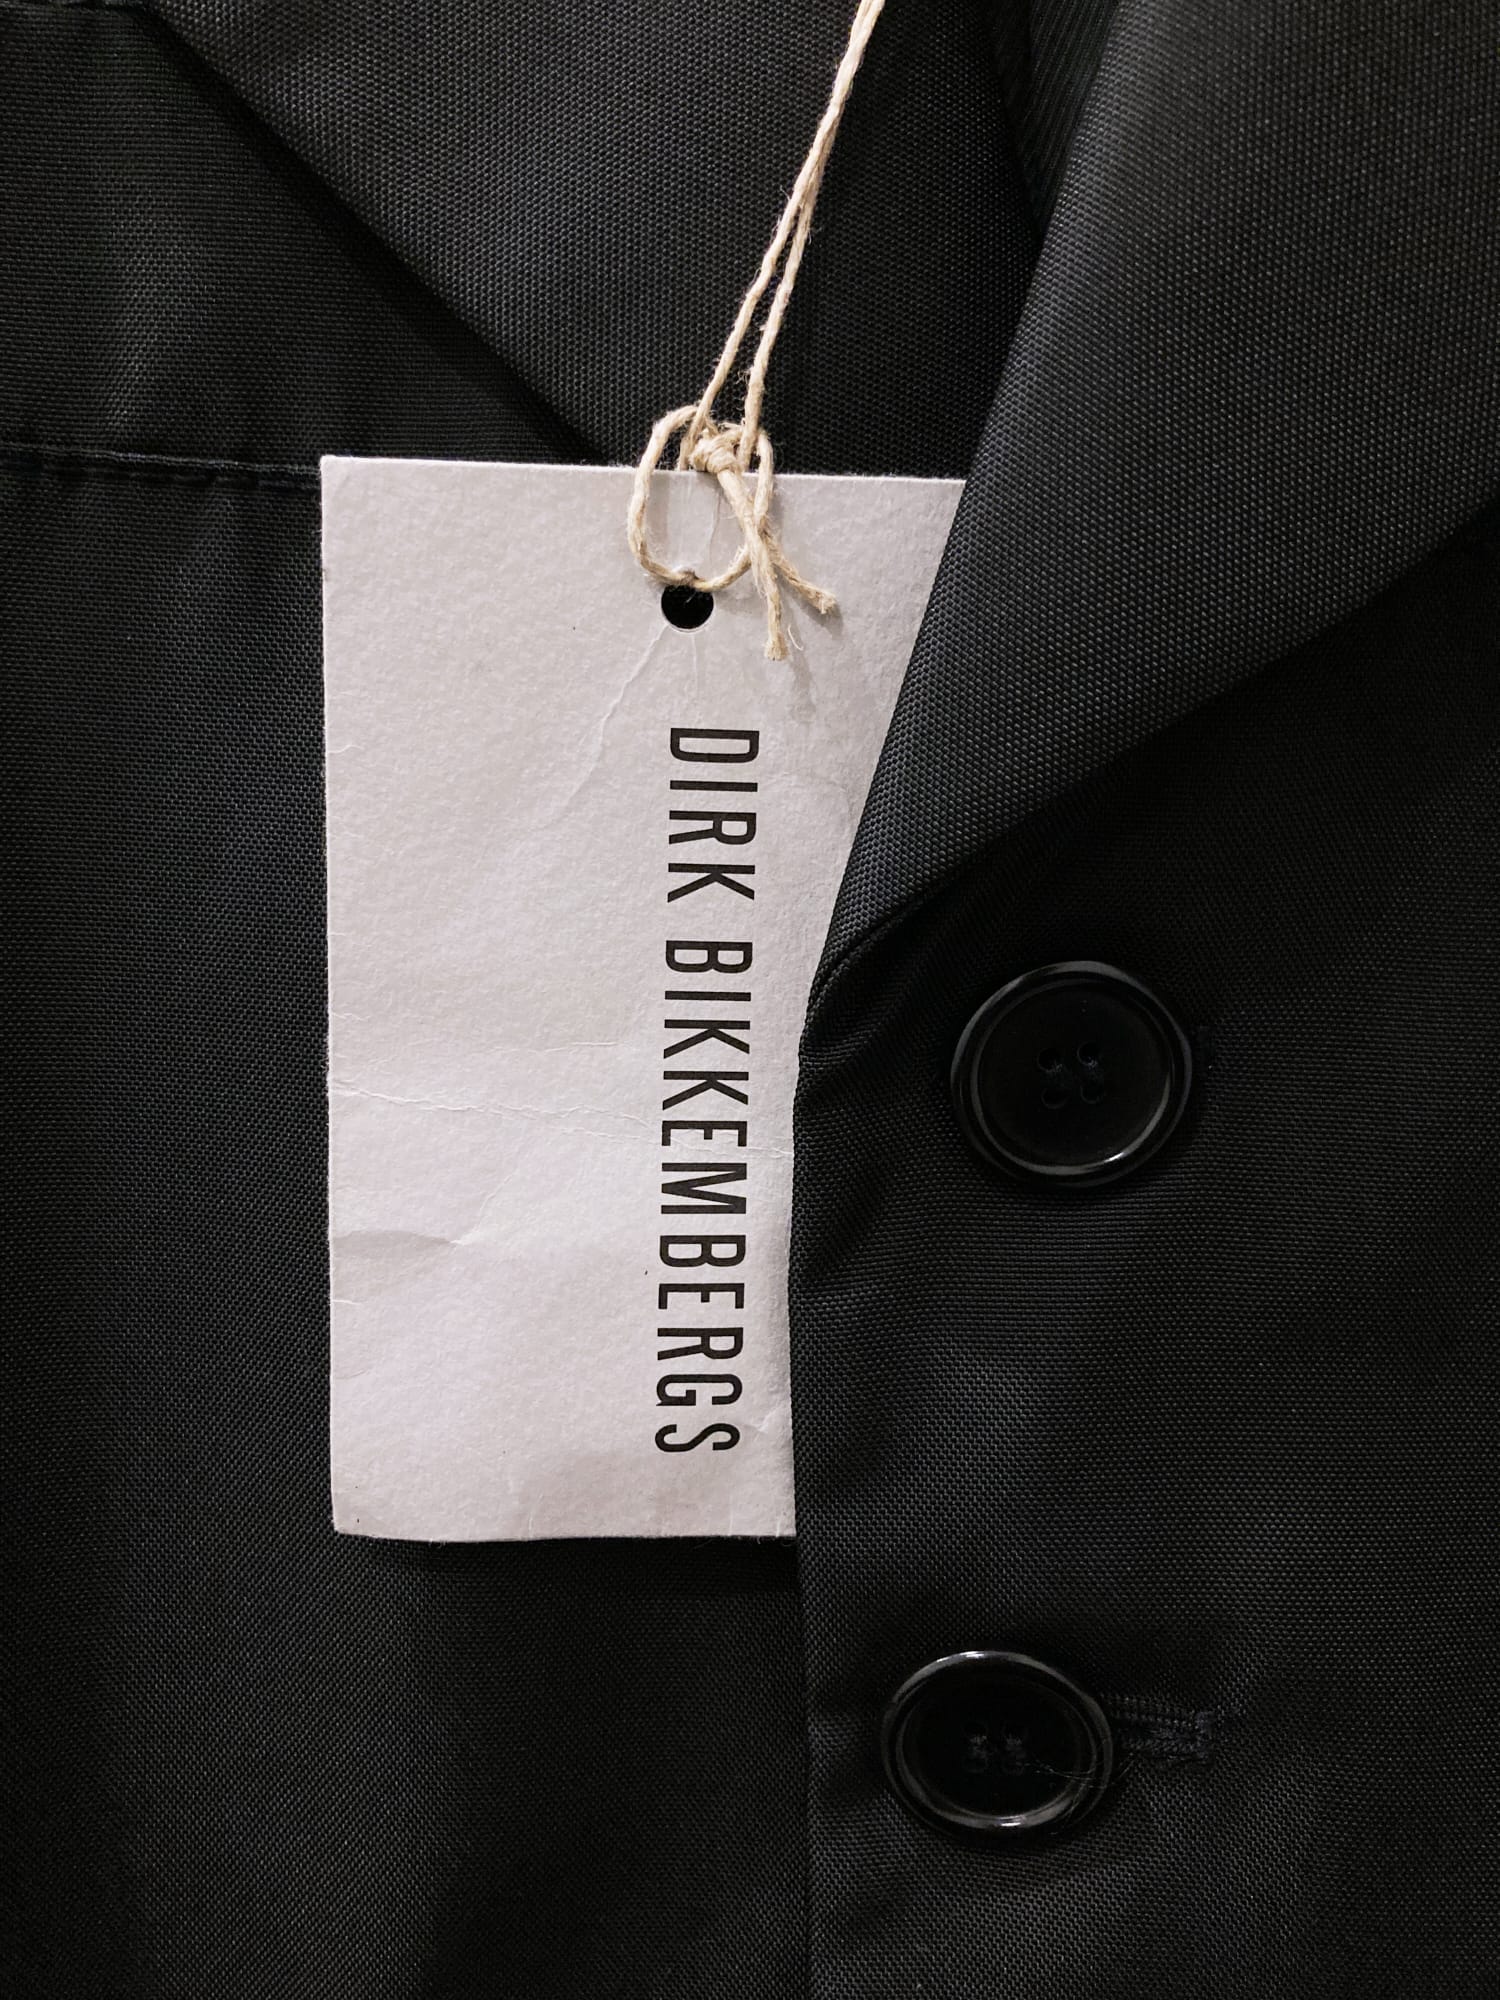 Dirk Bikkembergs Hommes 1996 black nylon canvas four button blazer - size 48